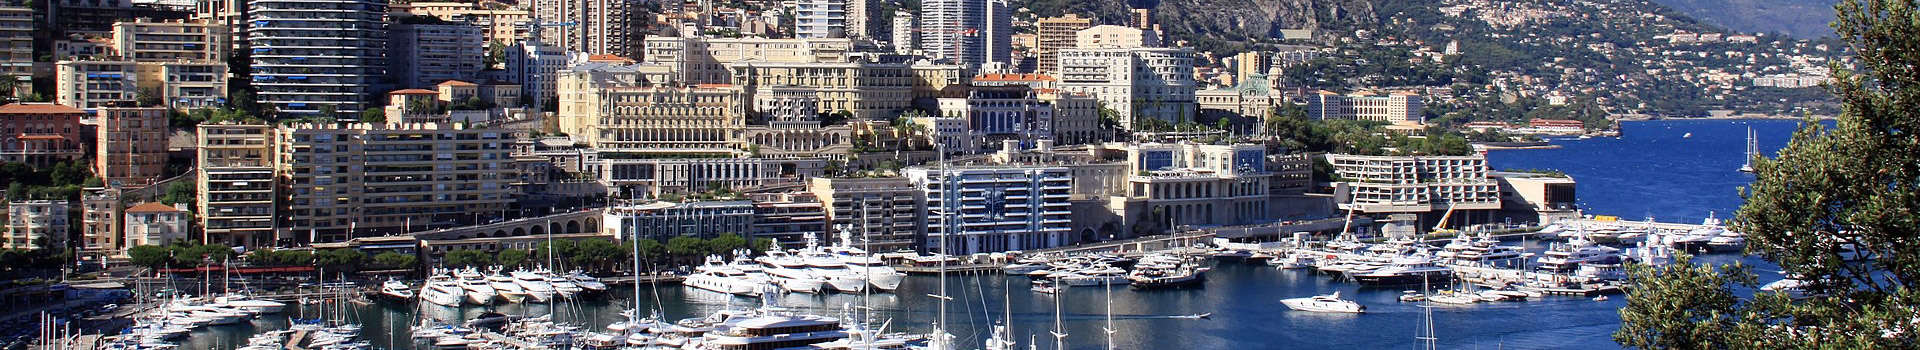 Monaco-Mote-Carlo-Av-rental-Company